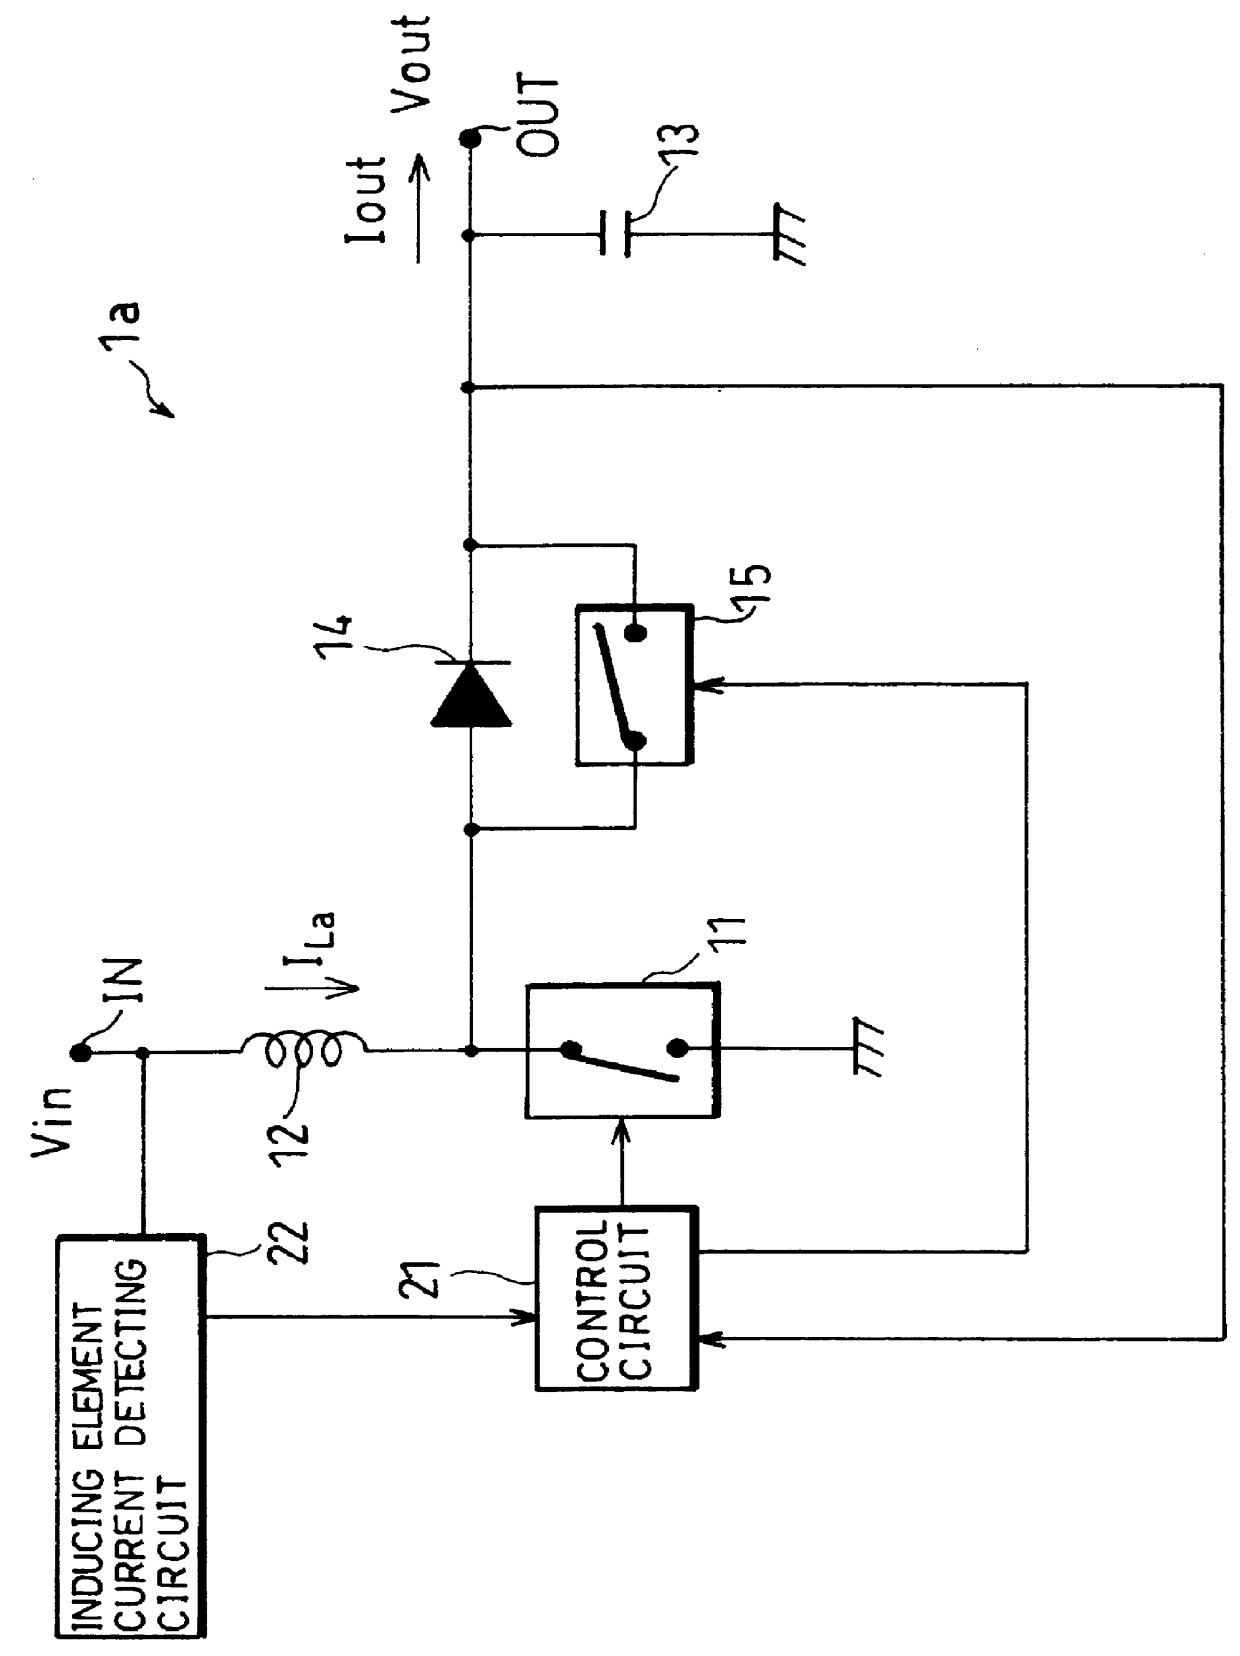 Synchronous rectifier circuit